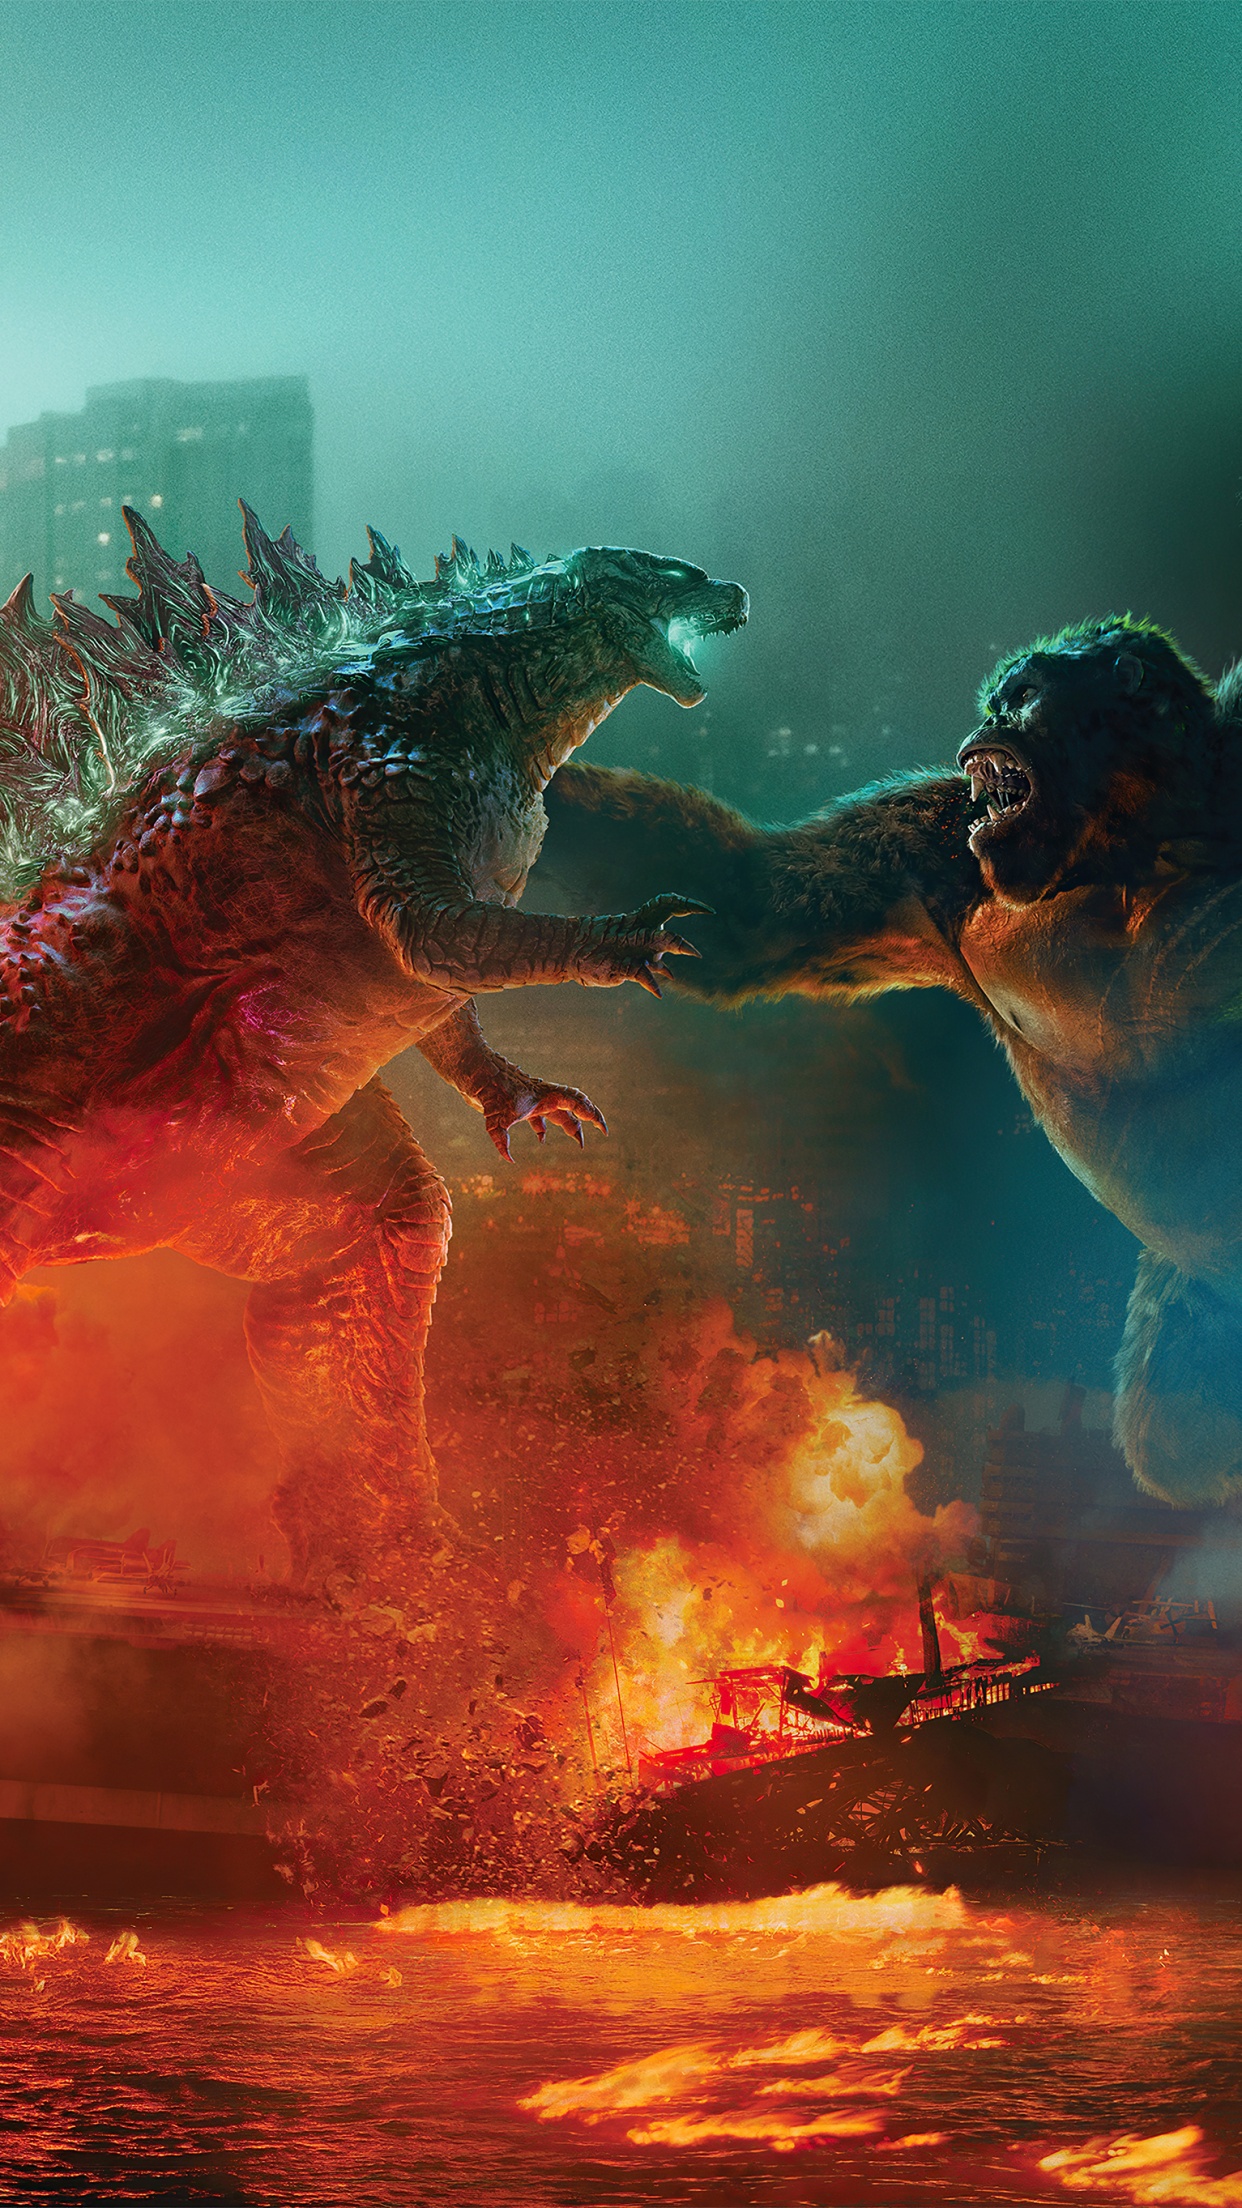 Godzilla vs Kong 4K Wallpaper, 2021 Movies, 5K, Movies, #4949